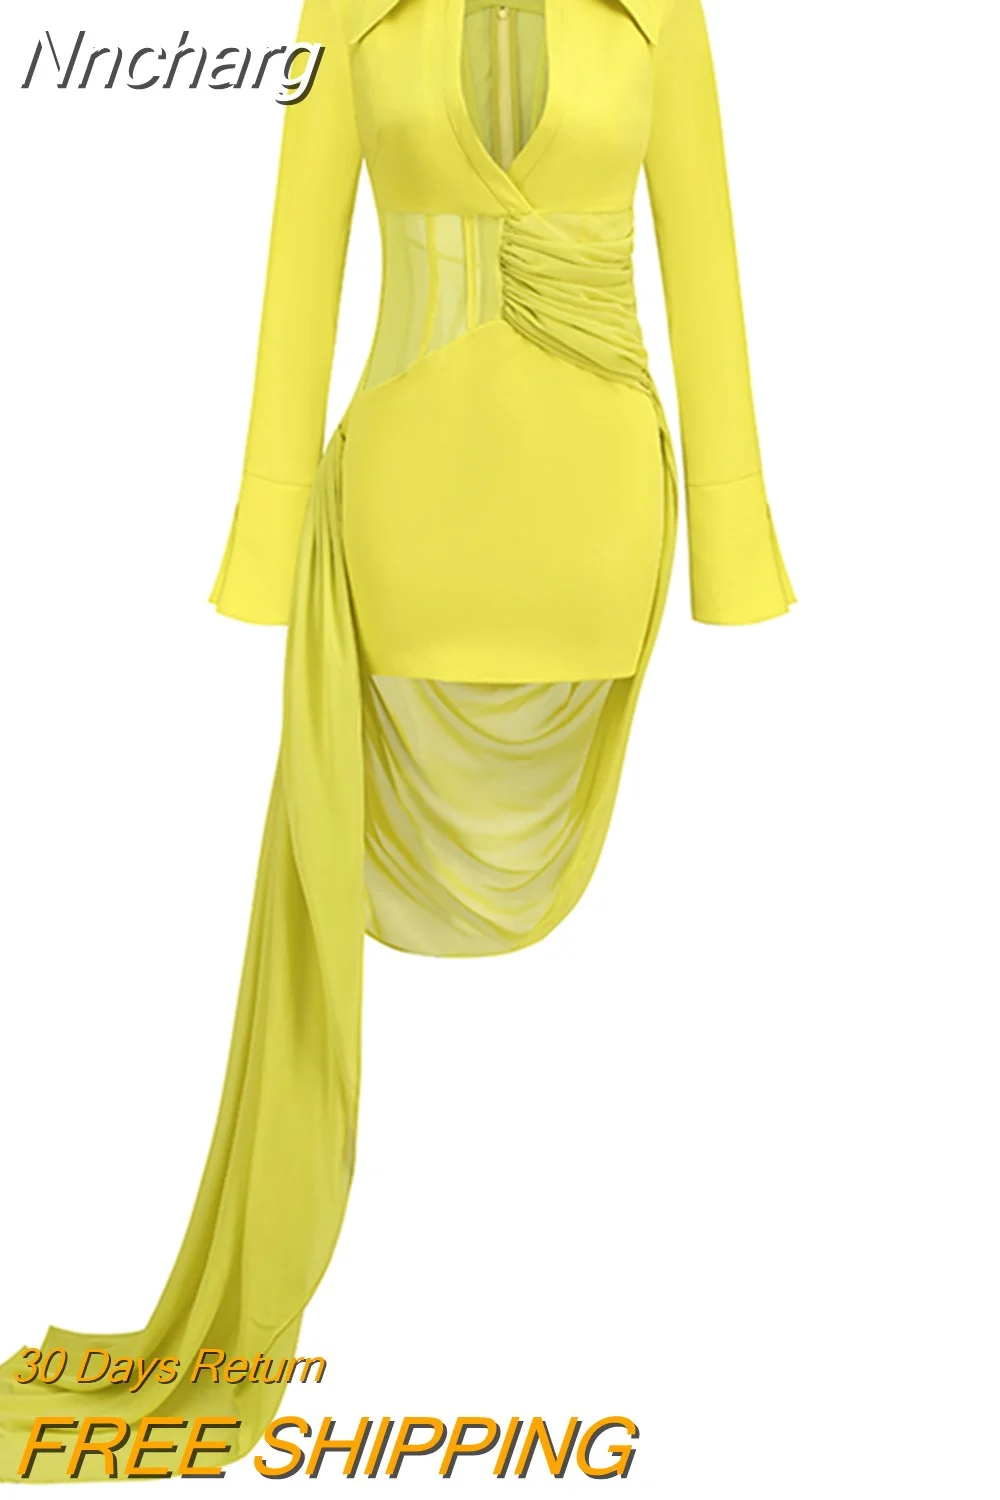 Nncharge Skinny Sexy Yellow Dresses For Women Deep V Neck Long Sleeve High Waist Spliced Mesh Mini Dress Female Fashion New